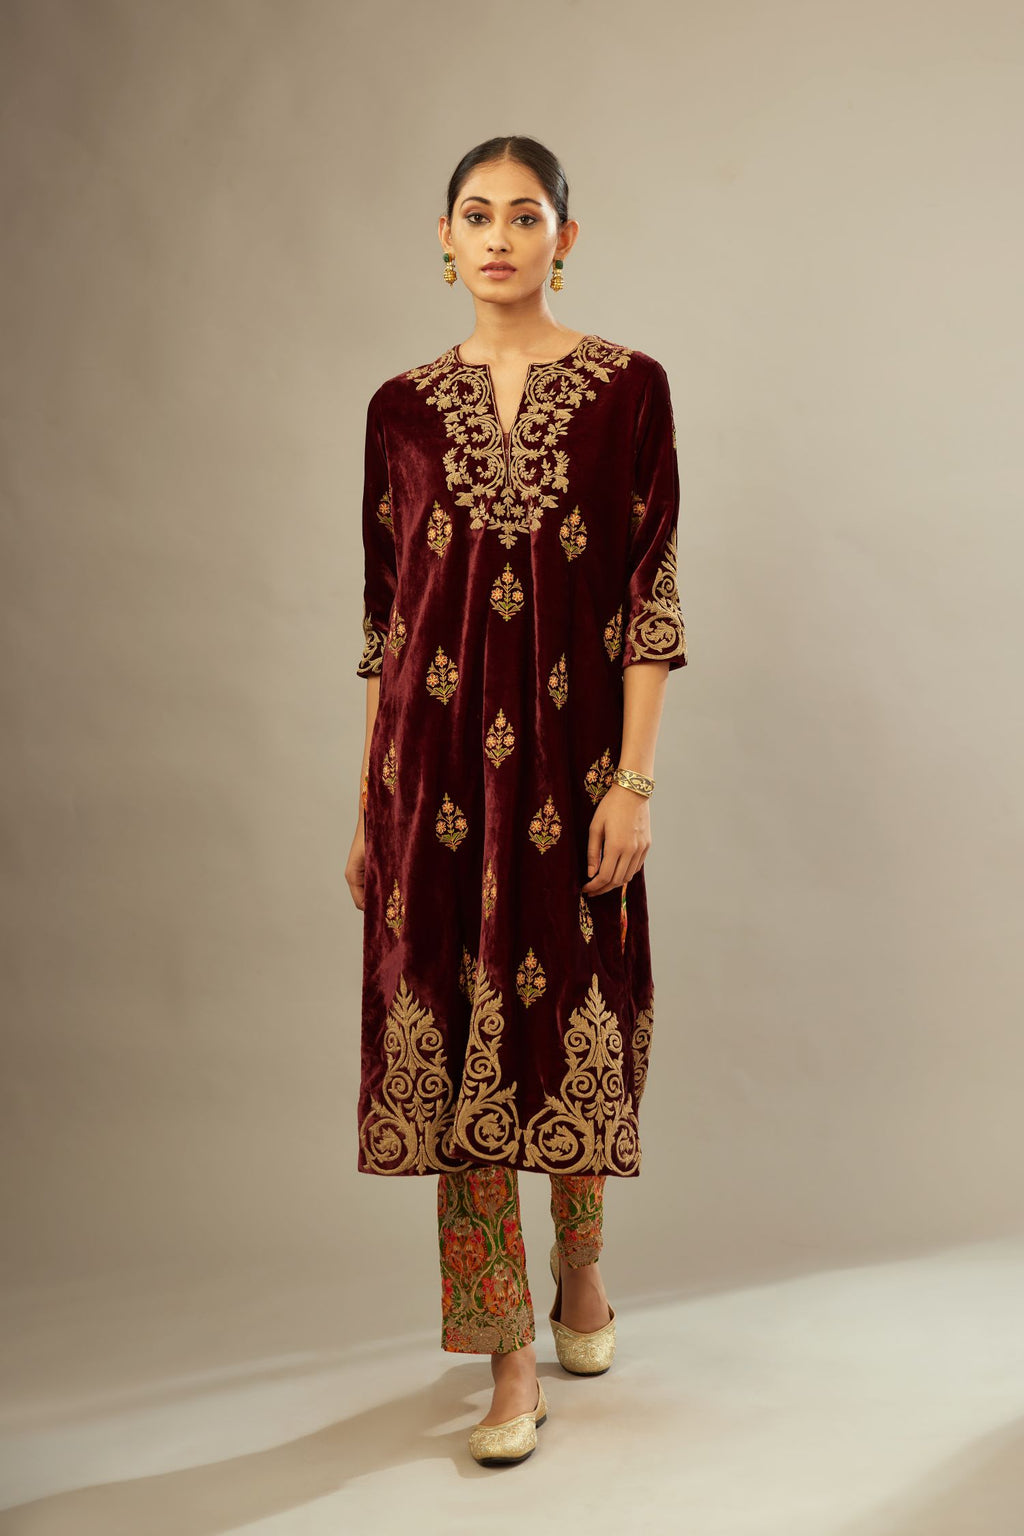 Marron silk velvet lined kurta set with light gold dori embroidery and contrast colored boota all-over the kurta.